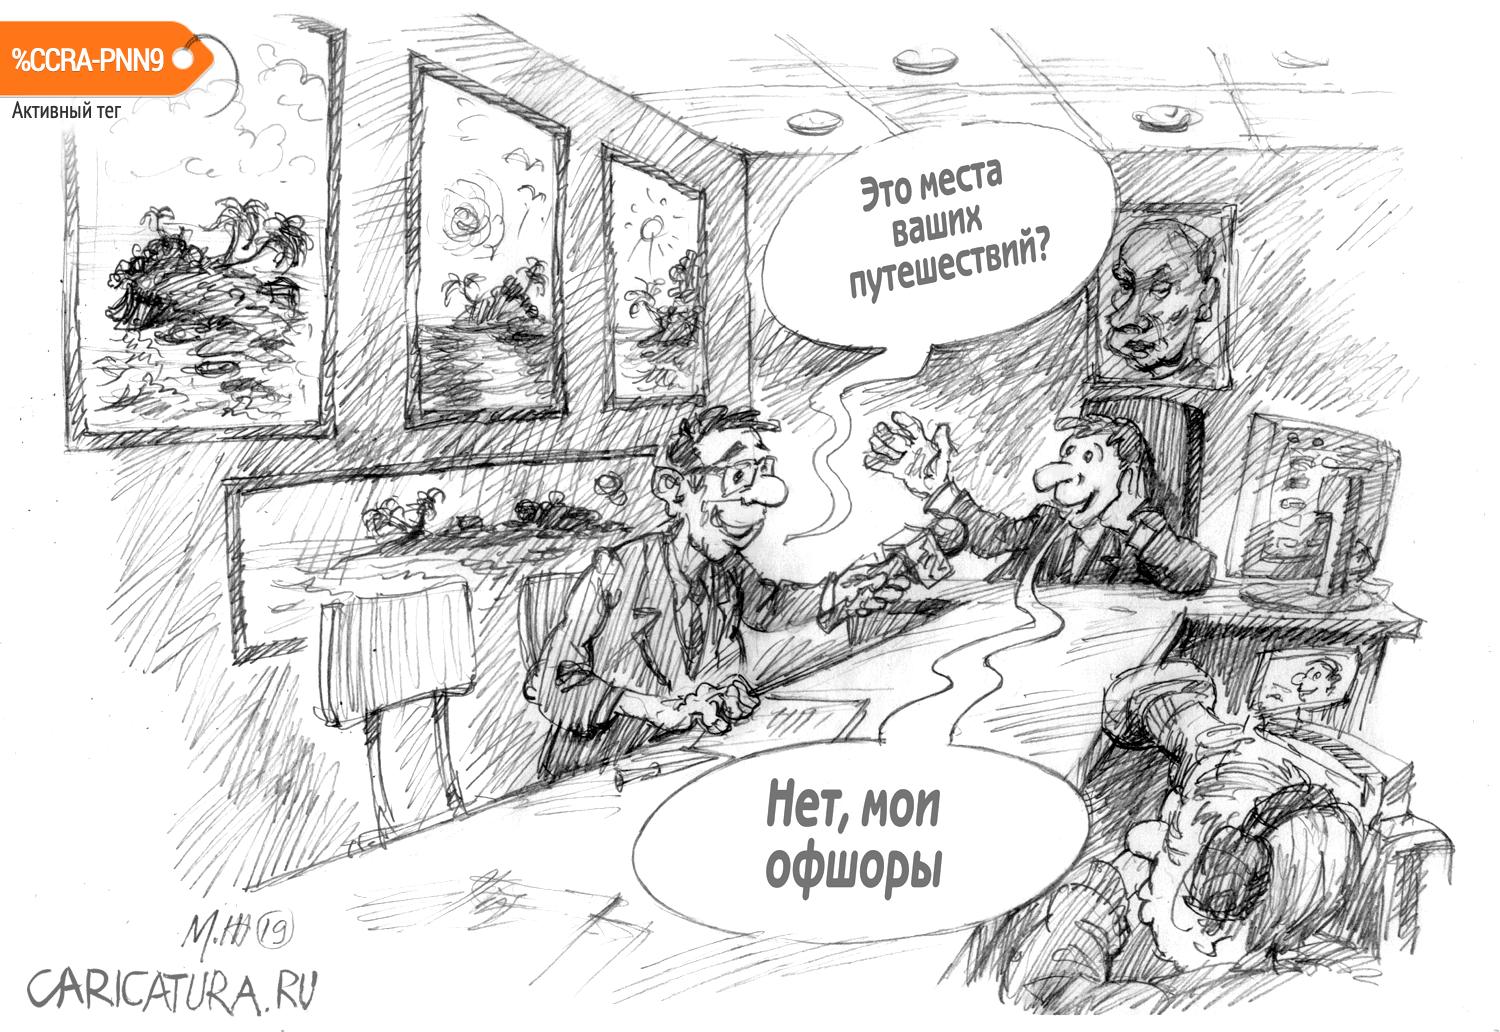 Карикатура "Острова", Михаил Жилкин